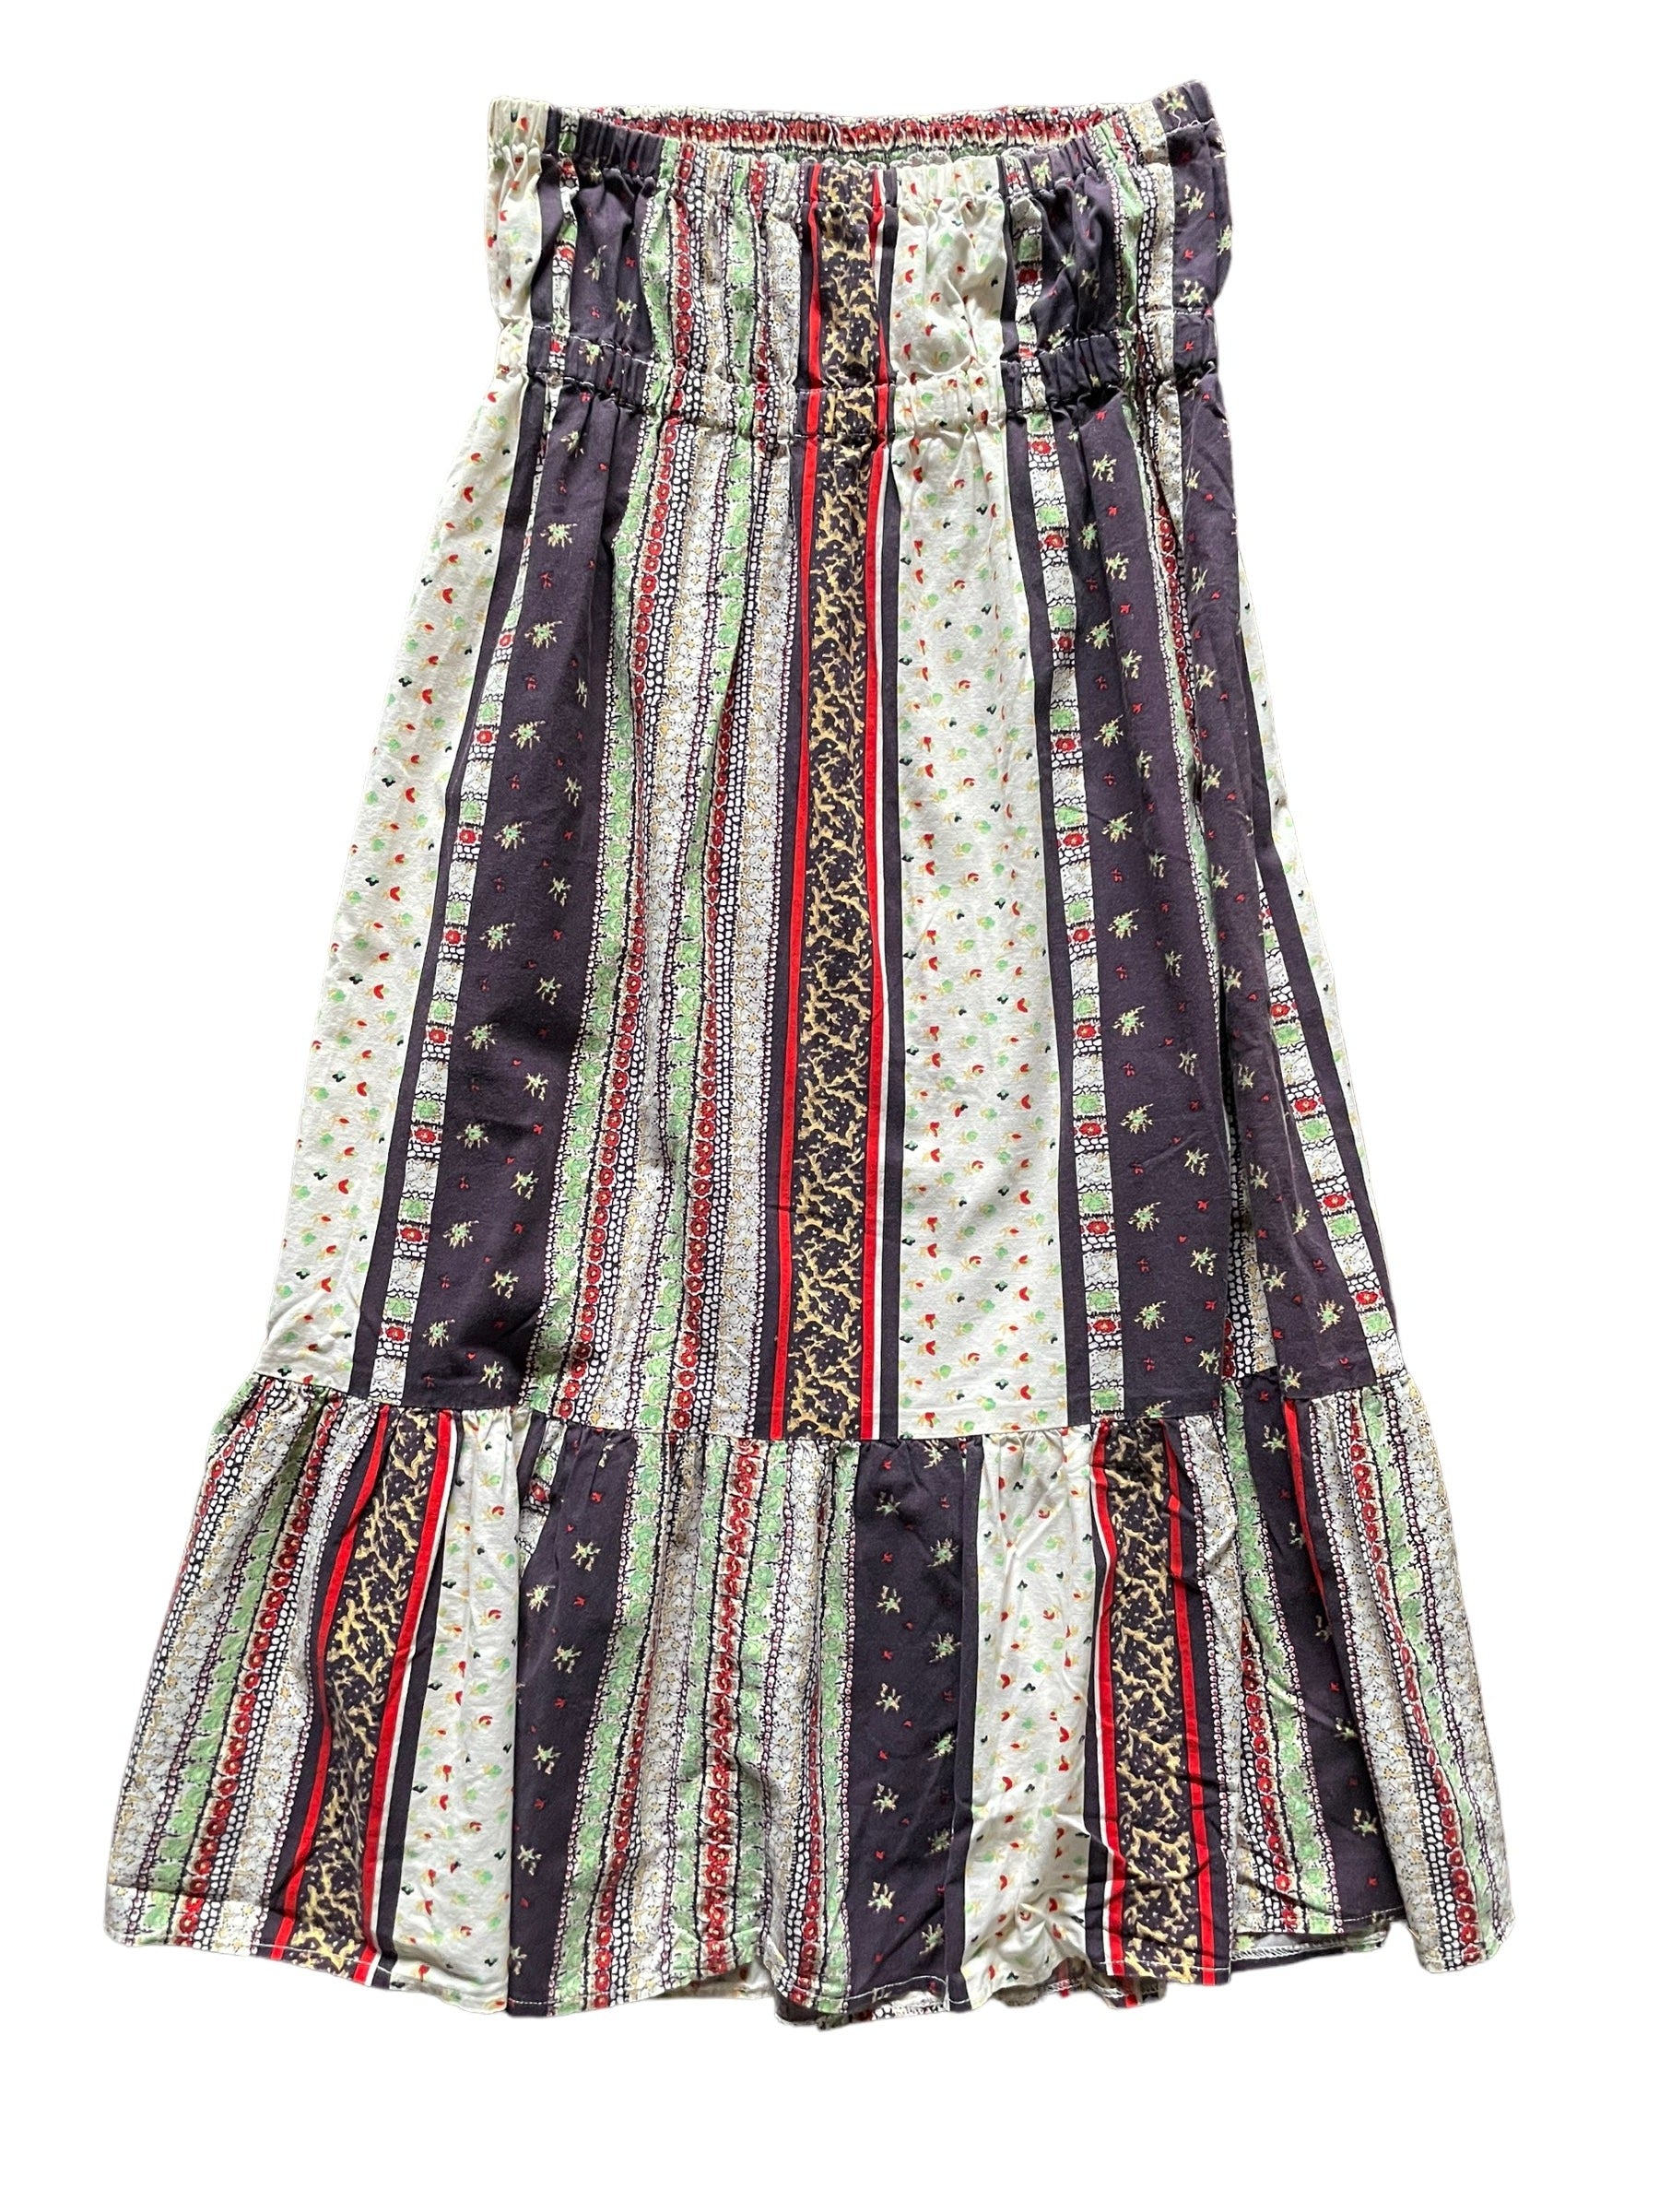 Full back view of Vintage 1970s Patchwork Sleeveless Dress SZ S-M |  Barn Owl Vintage Dresses | Seattle Vintage Ladies Clothing